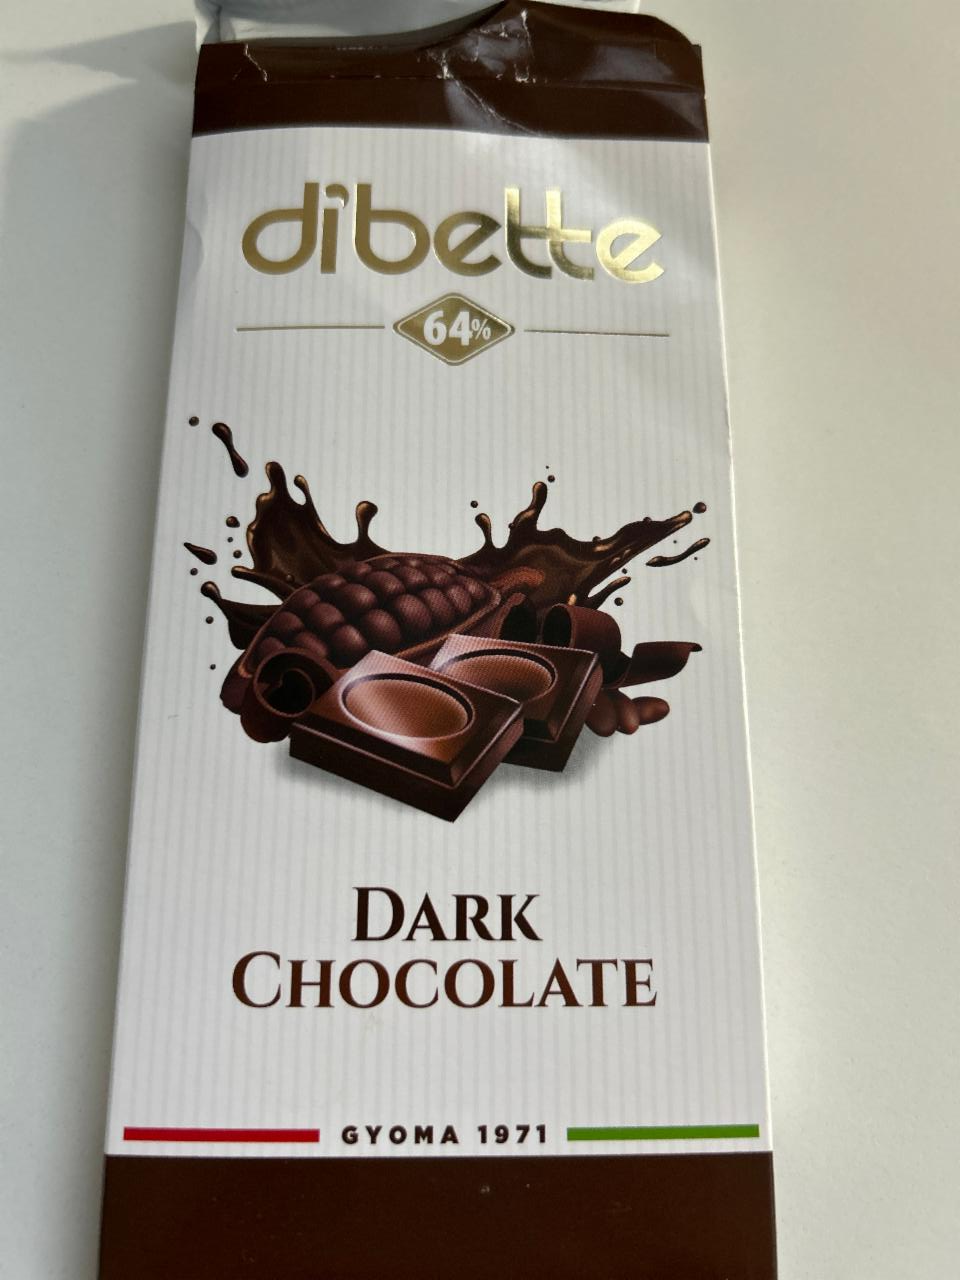 Fotografie - Dark Chocolate 64% Dibette